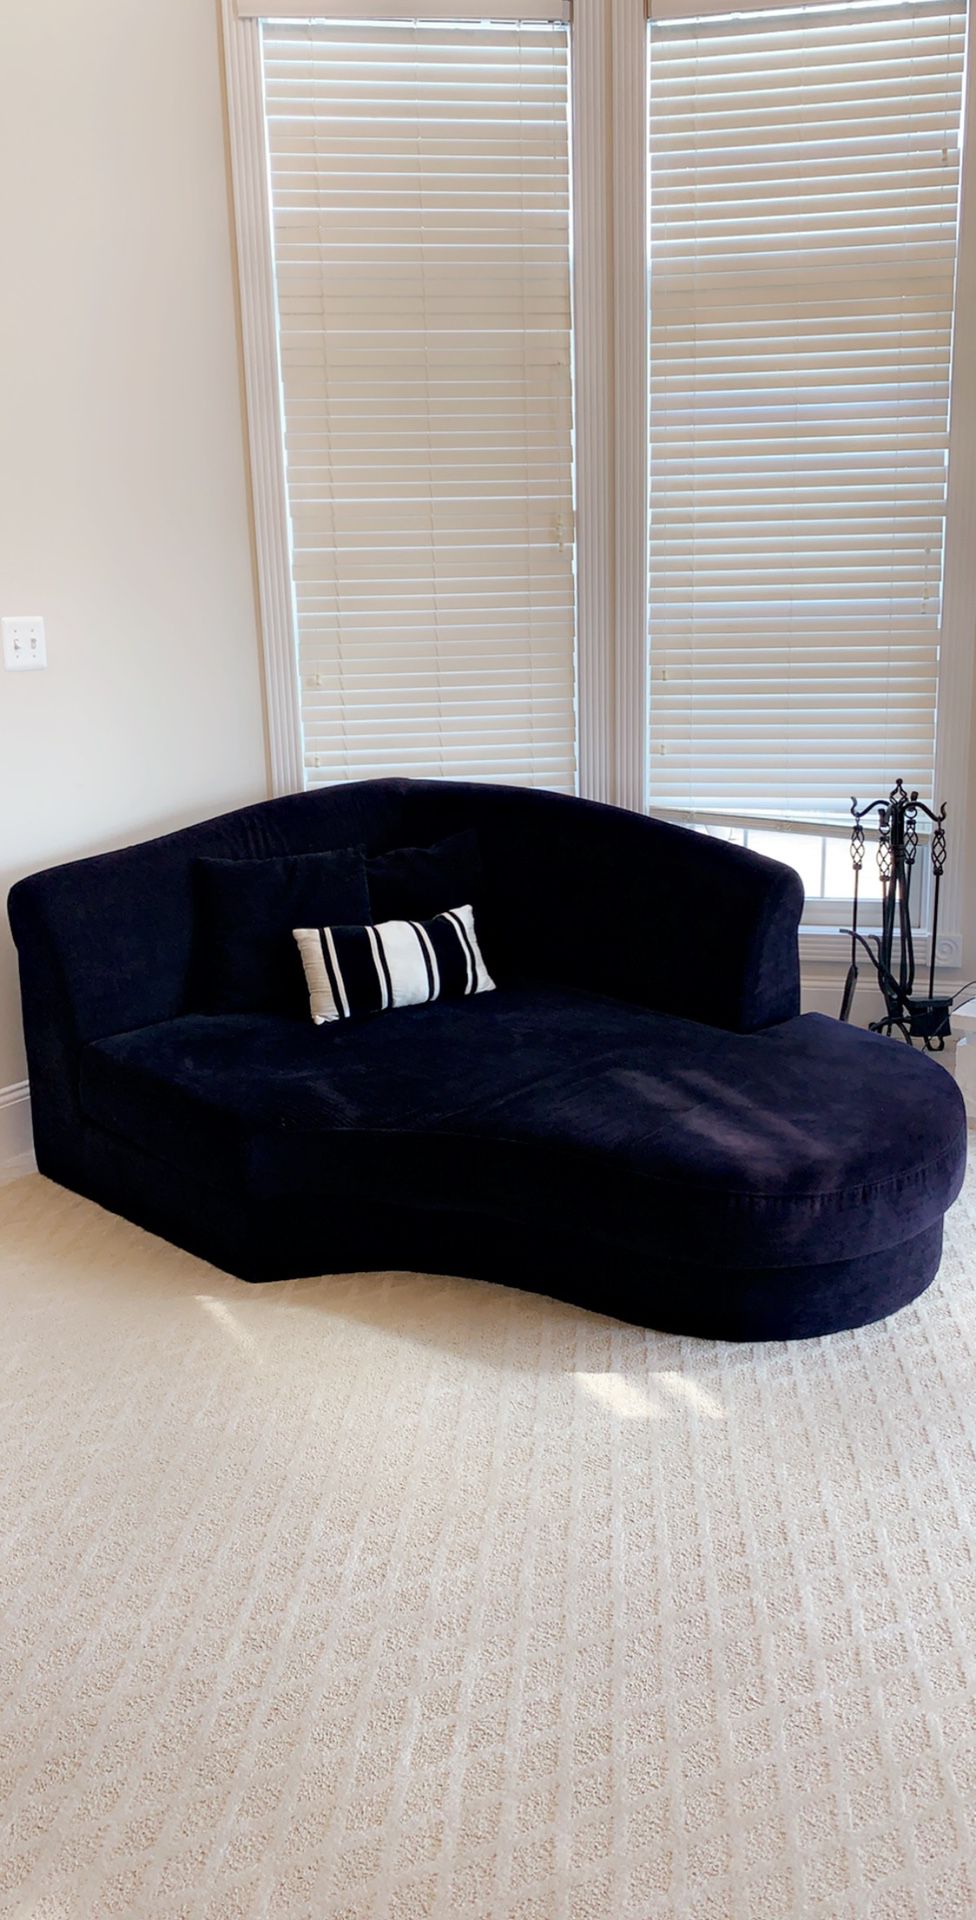 Beautiful black chase sofa super comfortable yet super stylish and modern. Hard find!